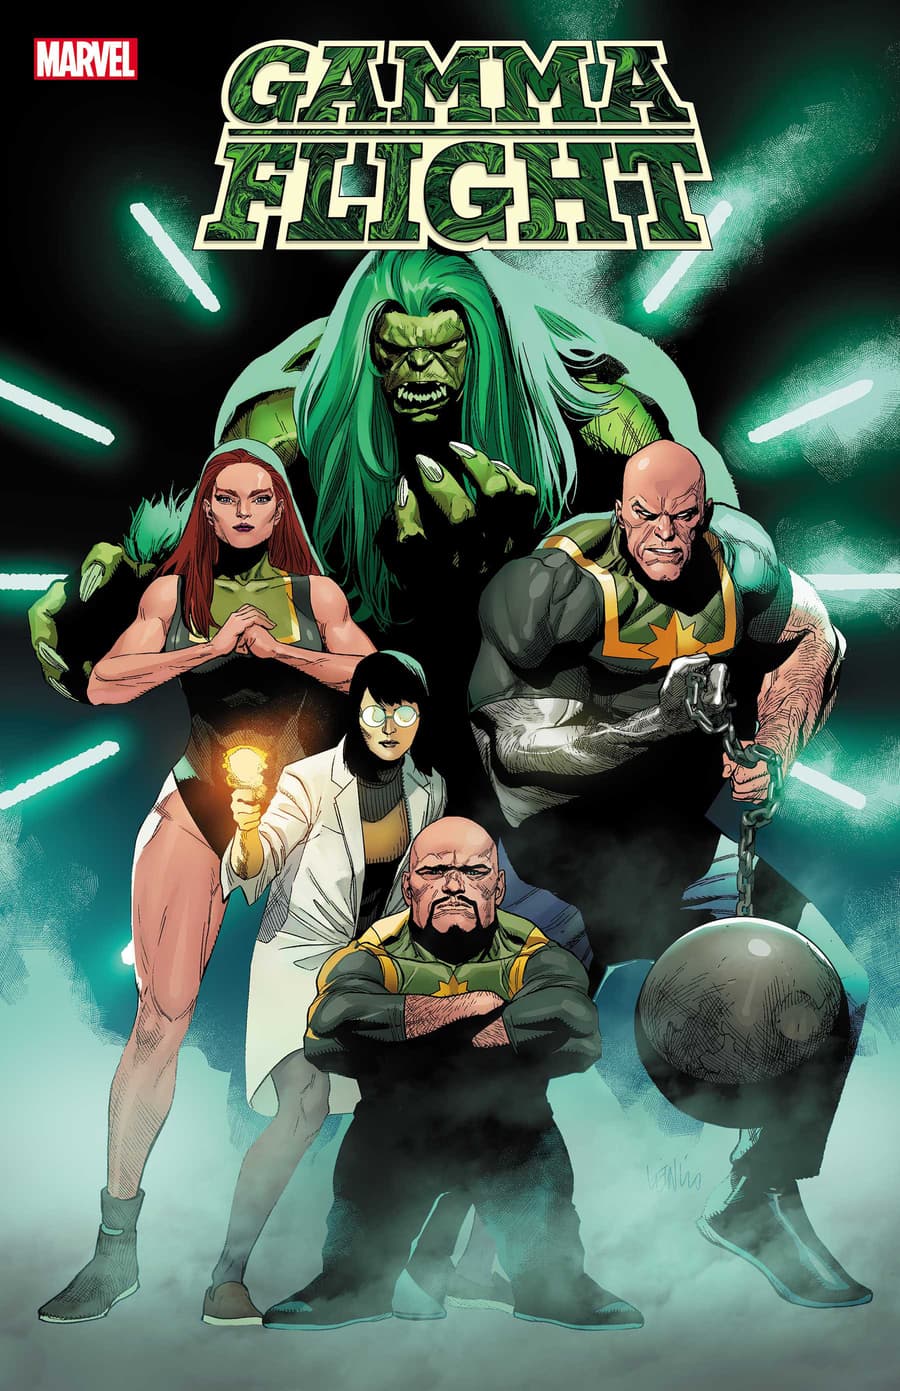 Marvel Introduces a New Gamma-Powered Team in Gamma Flight